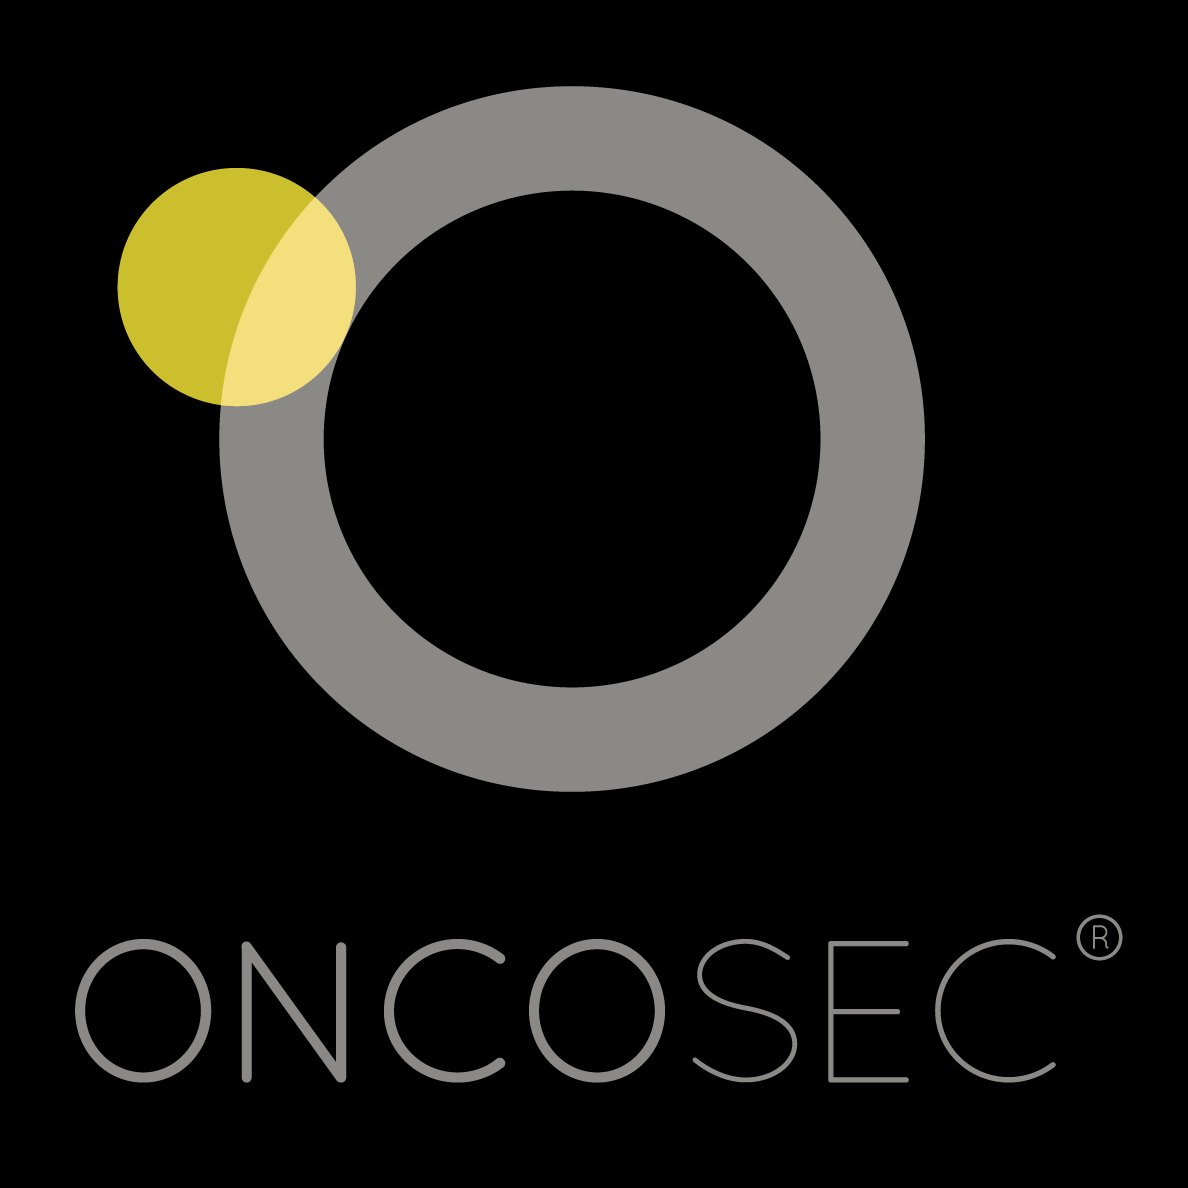 oncosec_master_logo-TM-2014.png